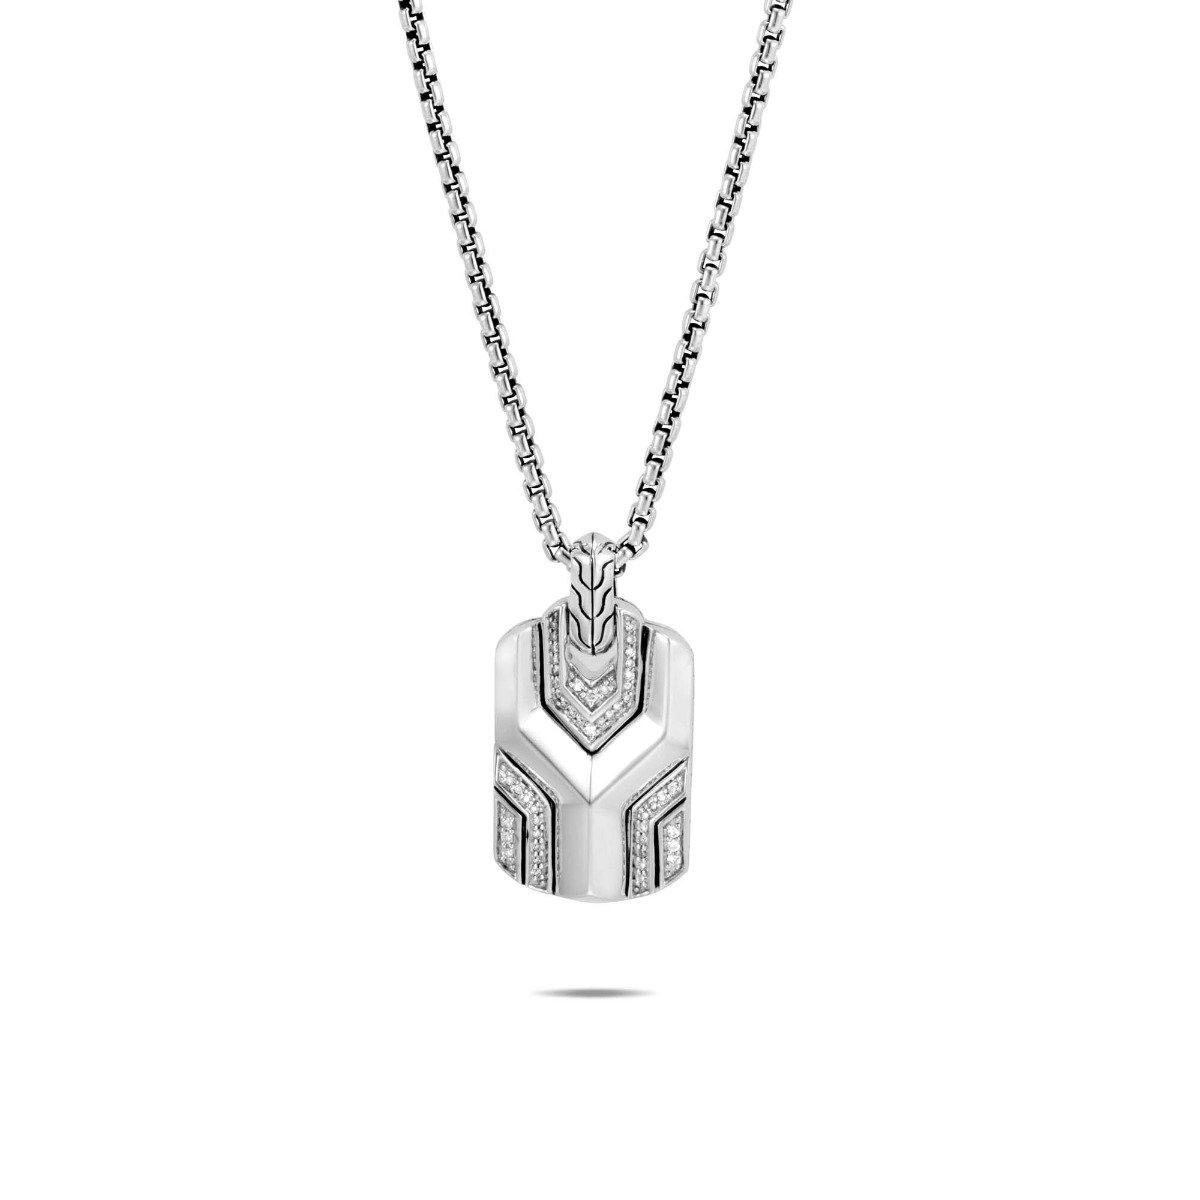 John Hardy Asli Chain Link Dog Tag Necklace with Diamonds